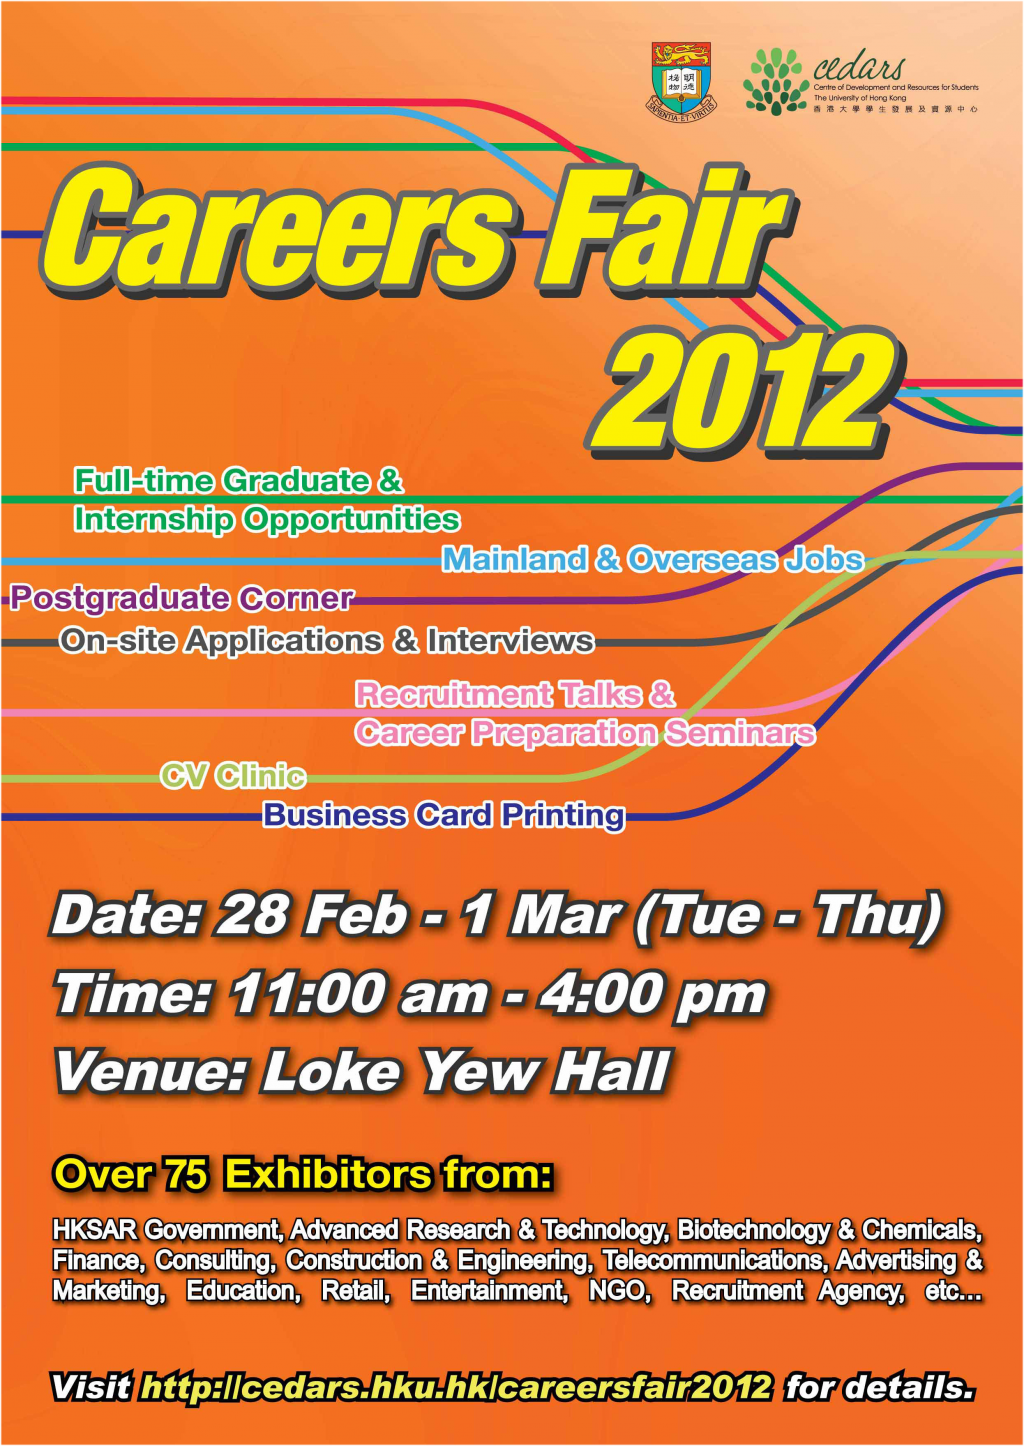 Careers Fair 2012 (28 Feb - 1 Mar)